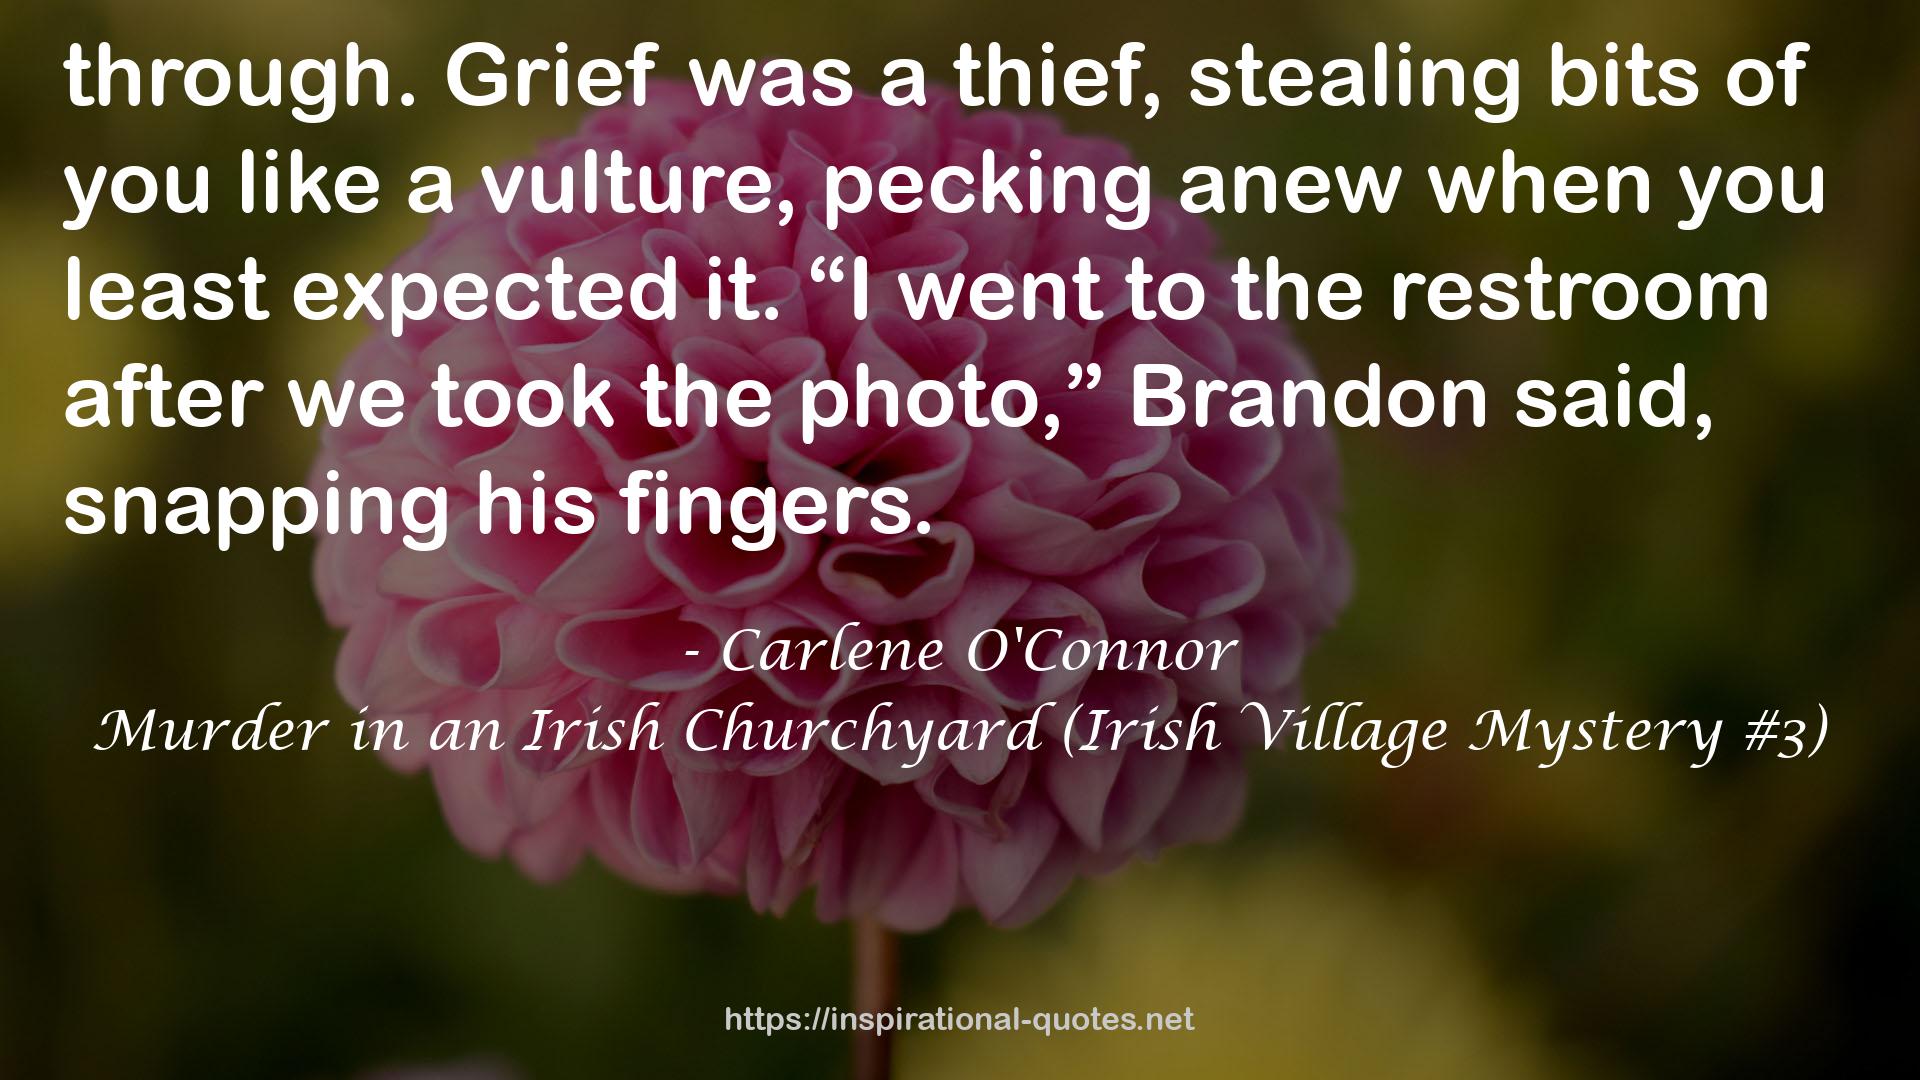 Murder in an Irish Churchyard (Irish Village Mystery #3) QUOTES